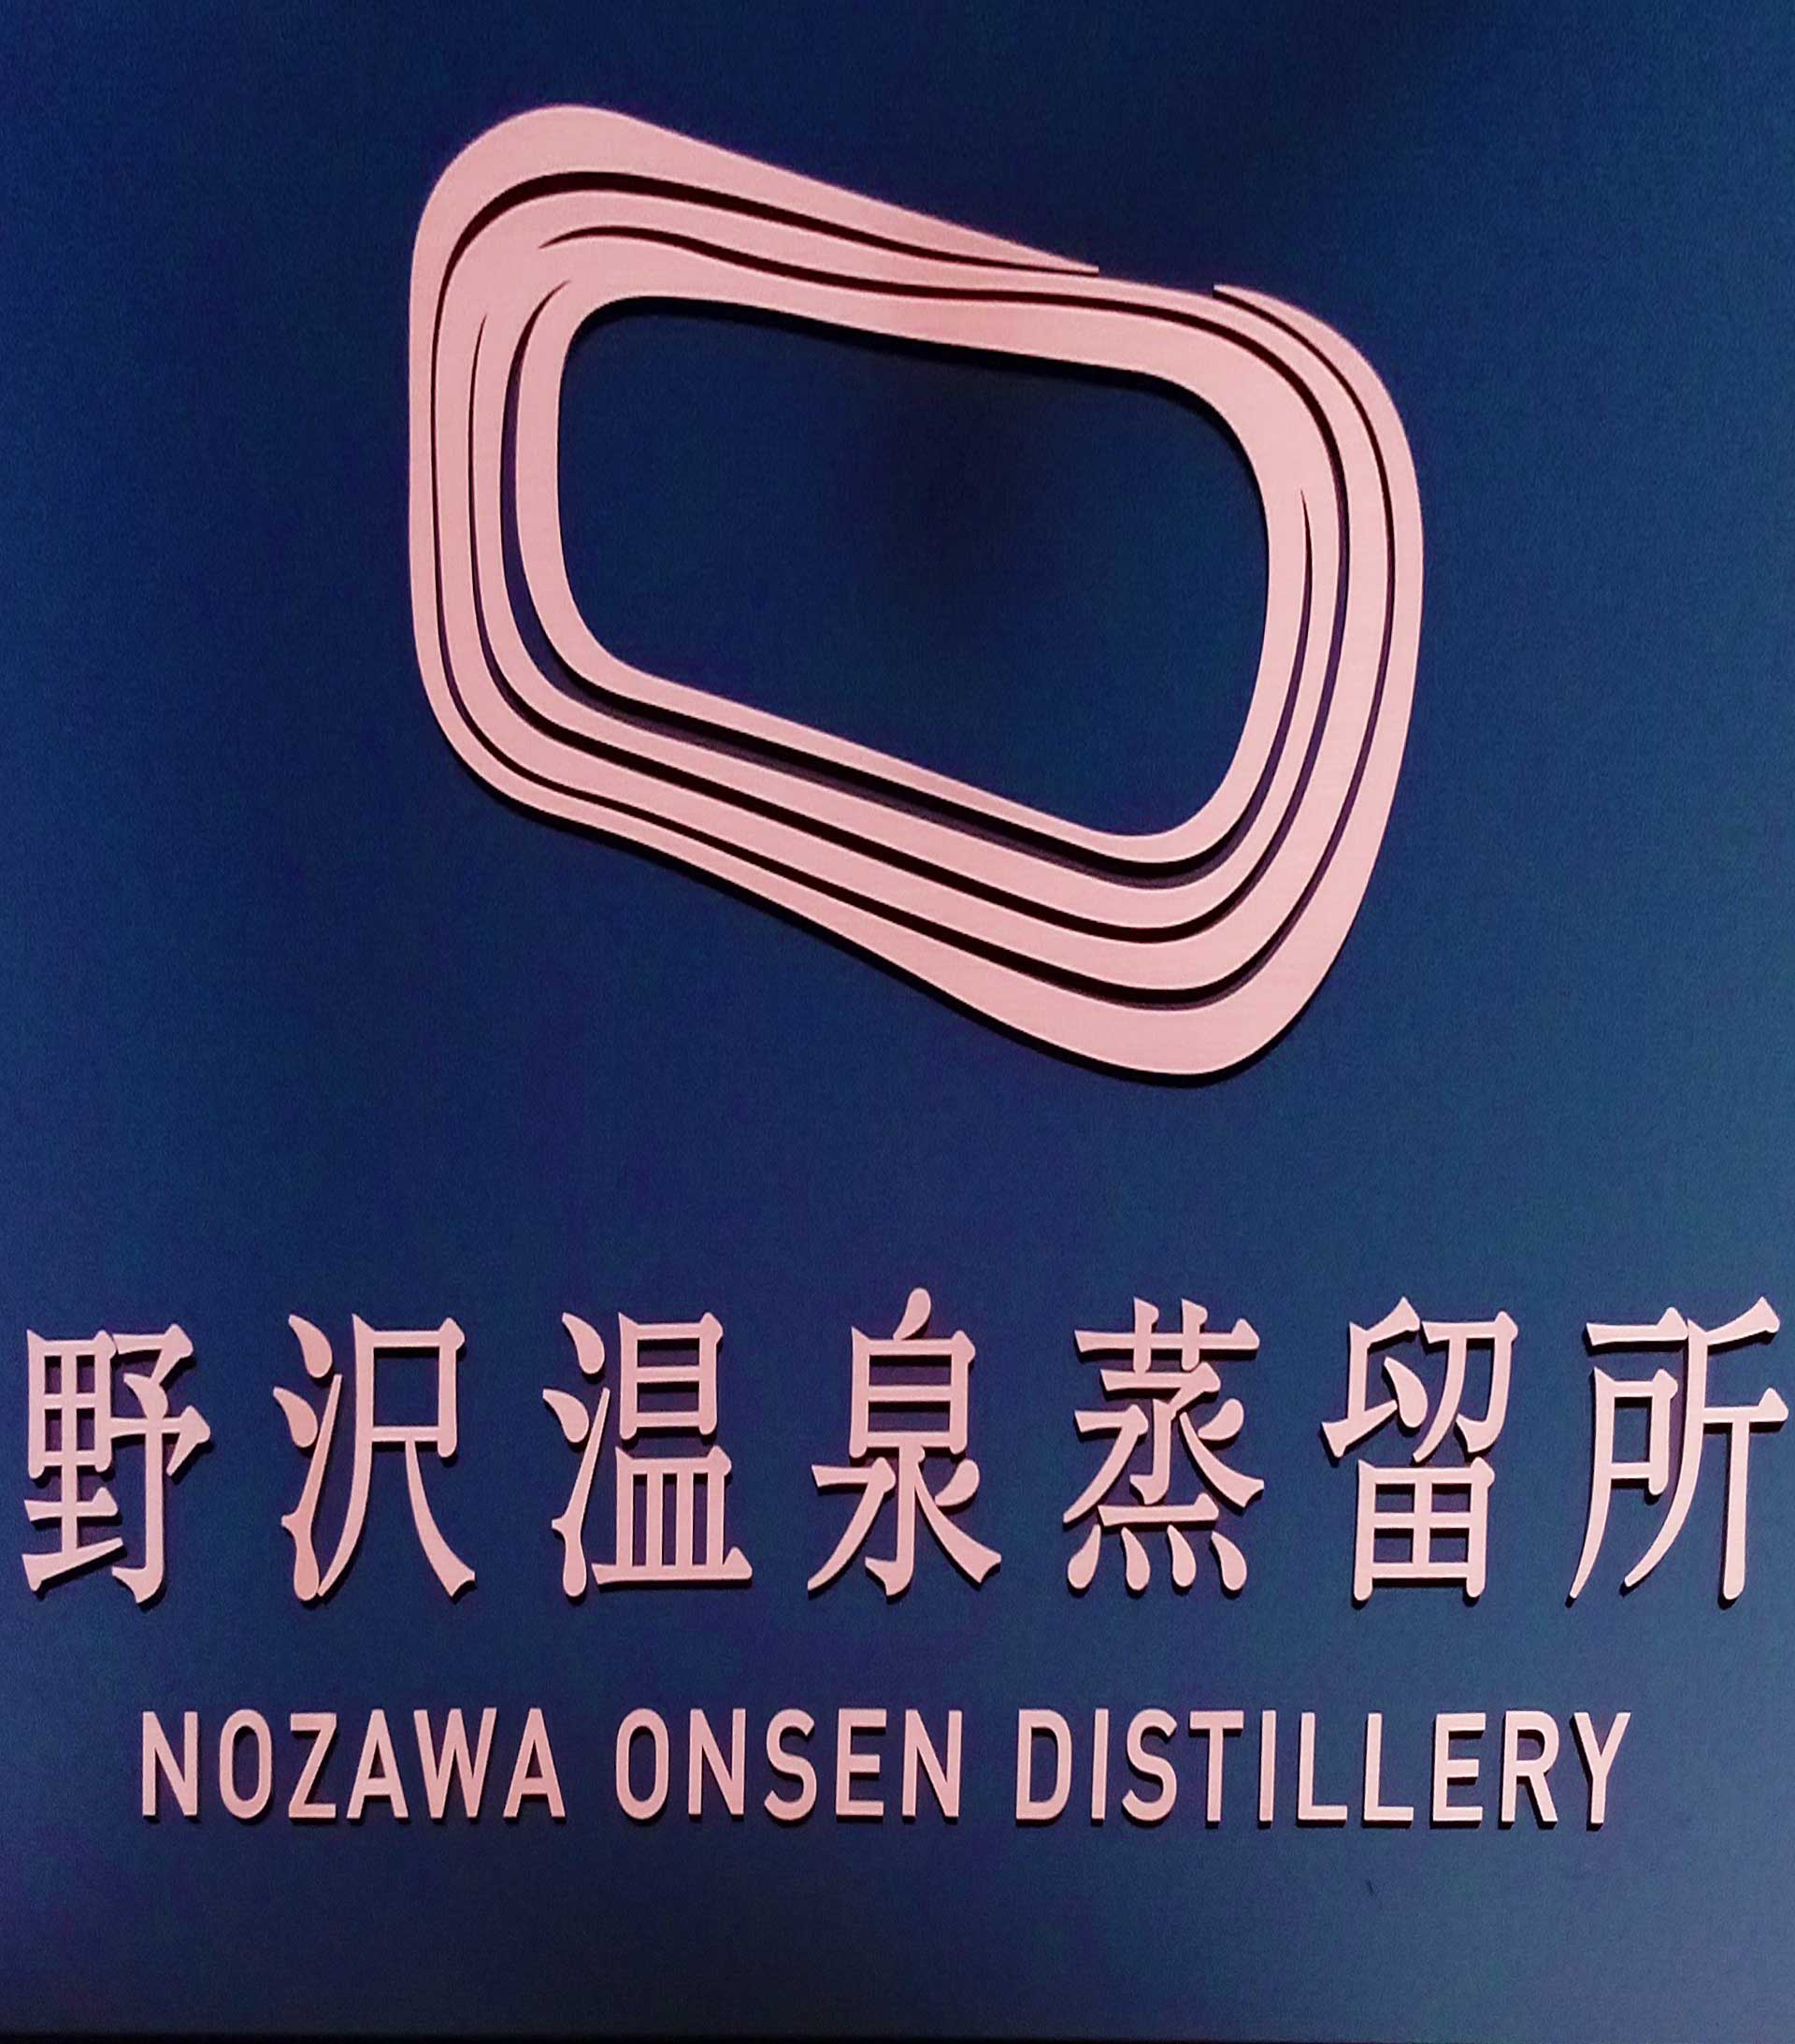 main banner of the nozawa onsen distillery